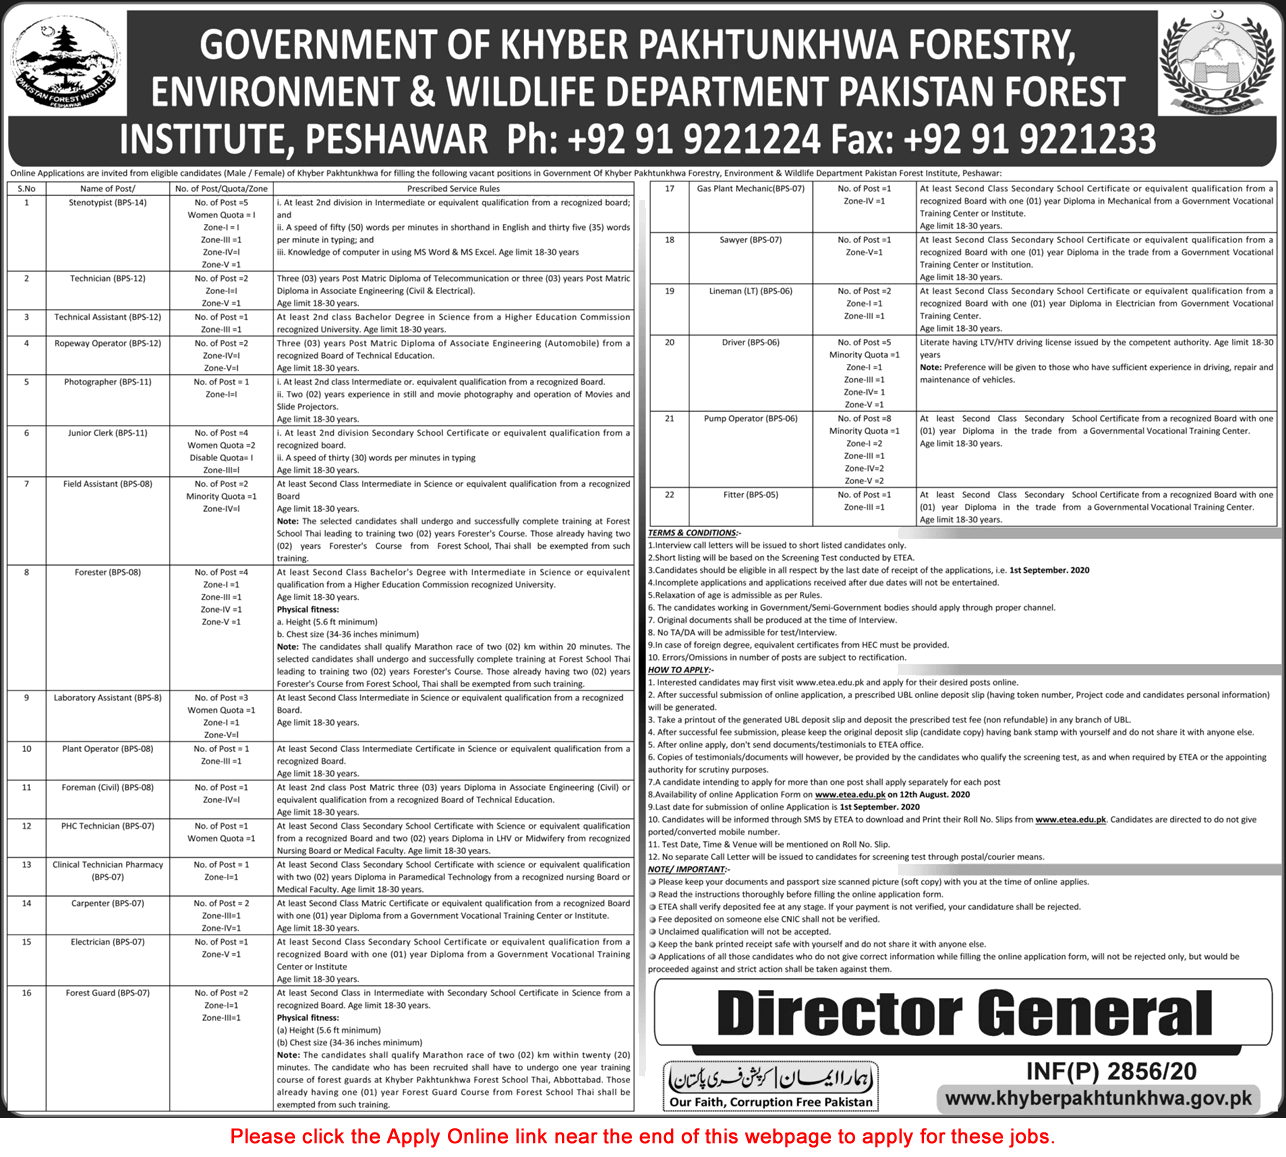 Forestry Environment and Wildlife Department KPK Jobs 2020 August ETEA Apply Online Pakistan Forest Institute Peshawar Latest